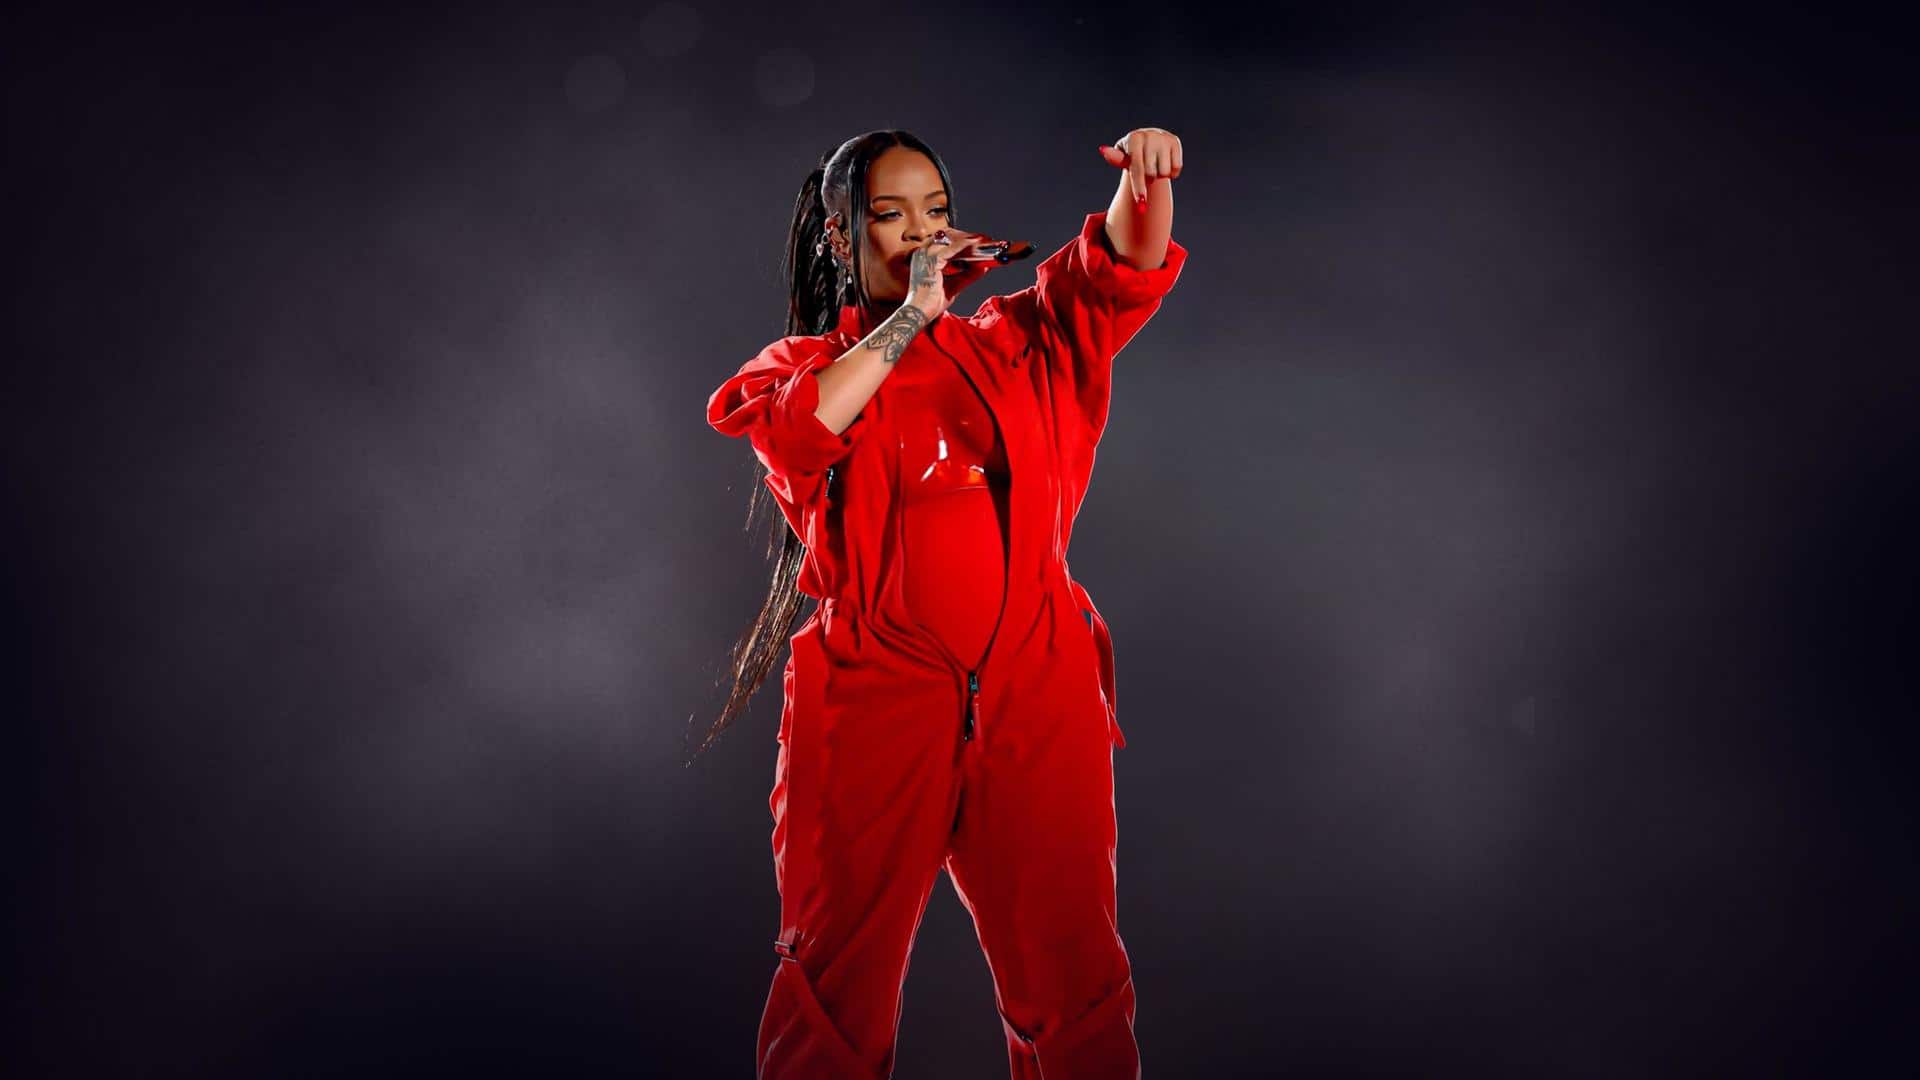 Popstar Rihanna confirms pregnancy during Super Bowl Halftime Show!